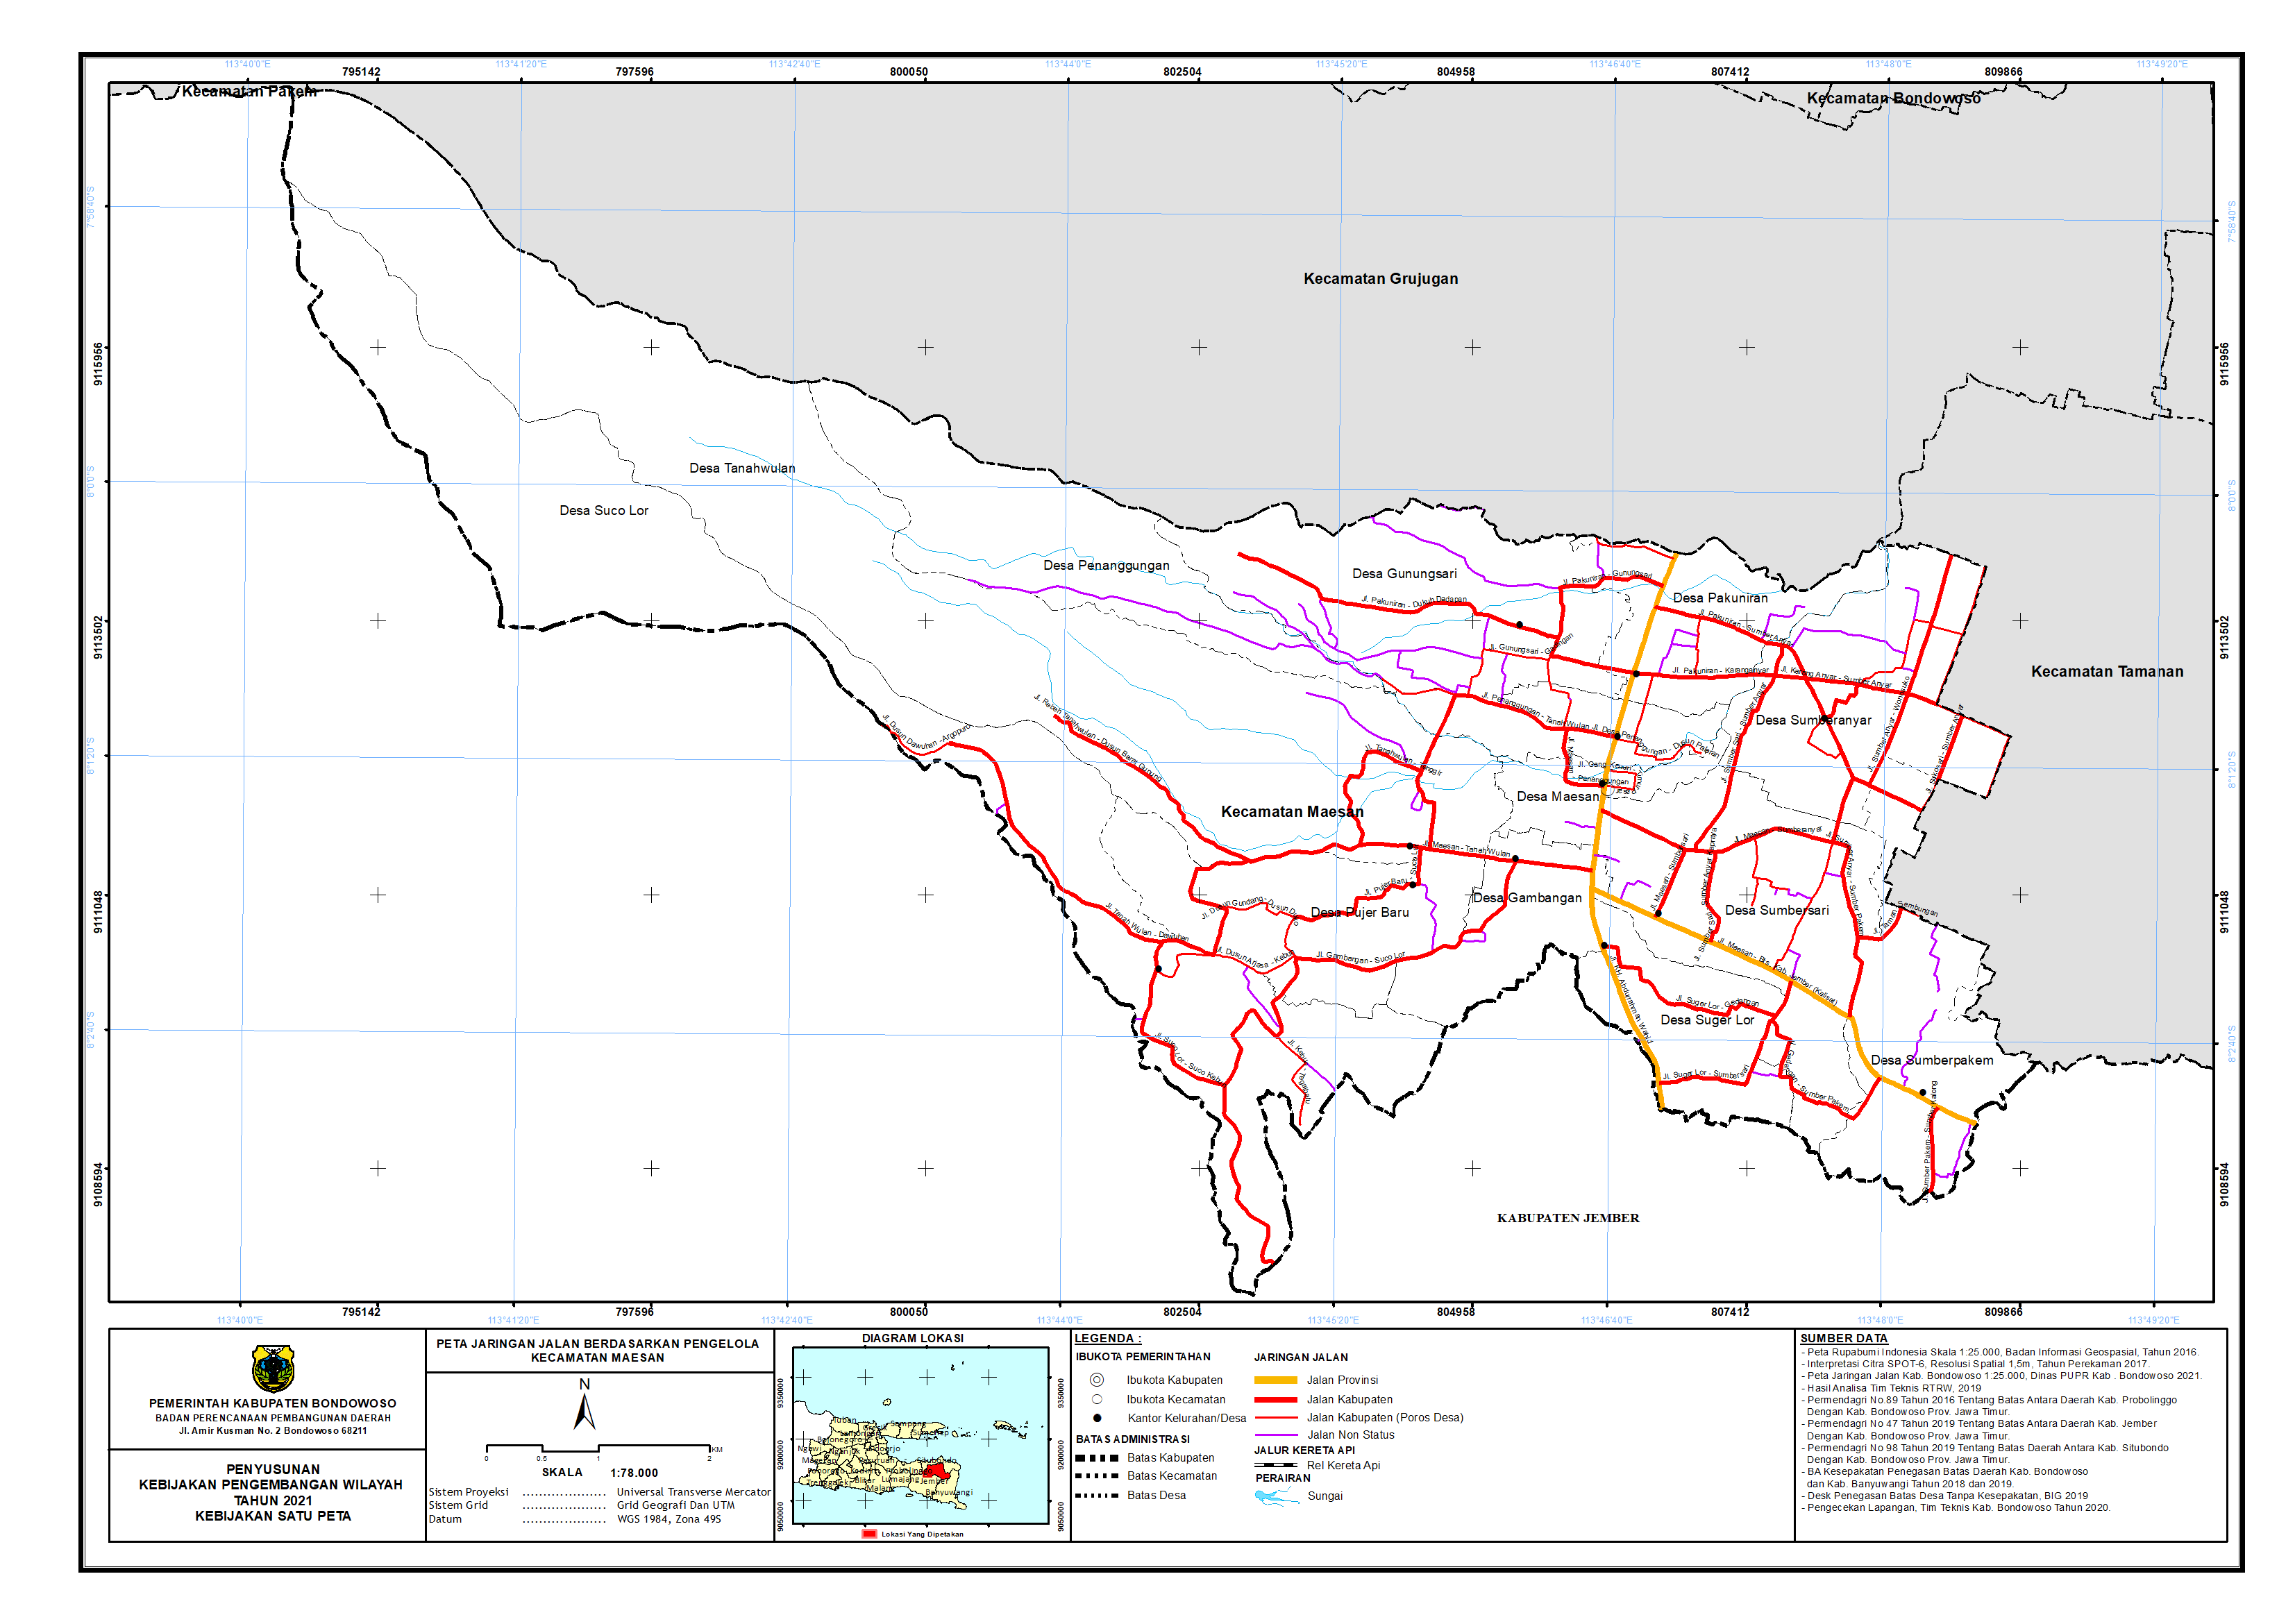 Peta Jaringan Jalan Berdasarkan Pengelola Kecamatan Maesan.png